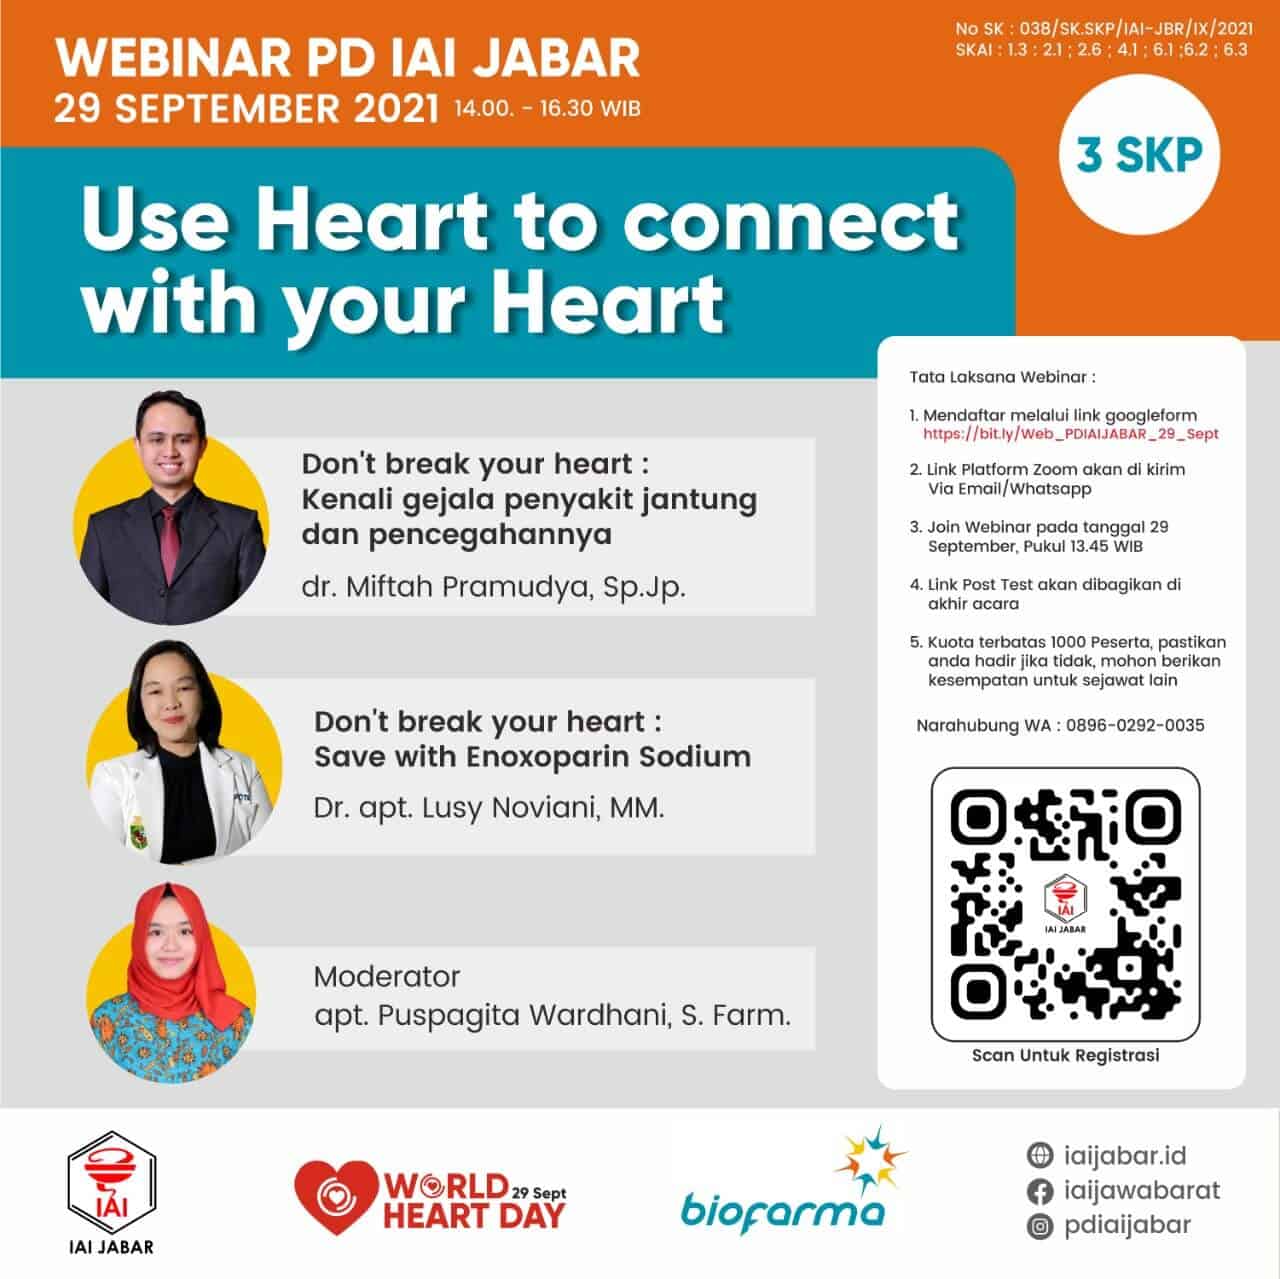 Webinar PD IAI Jabar Use Heart to Connect with Your Heart